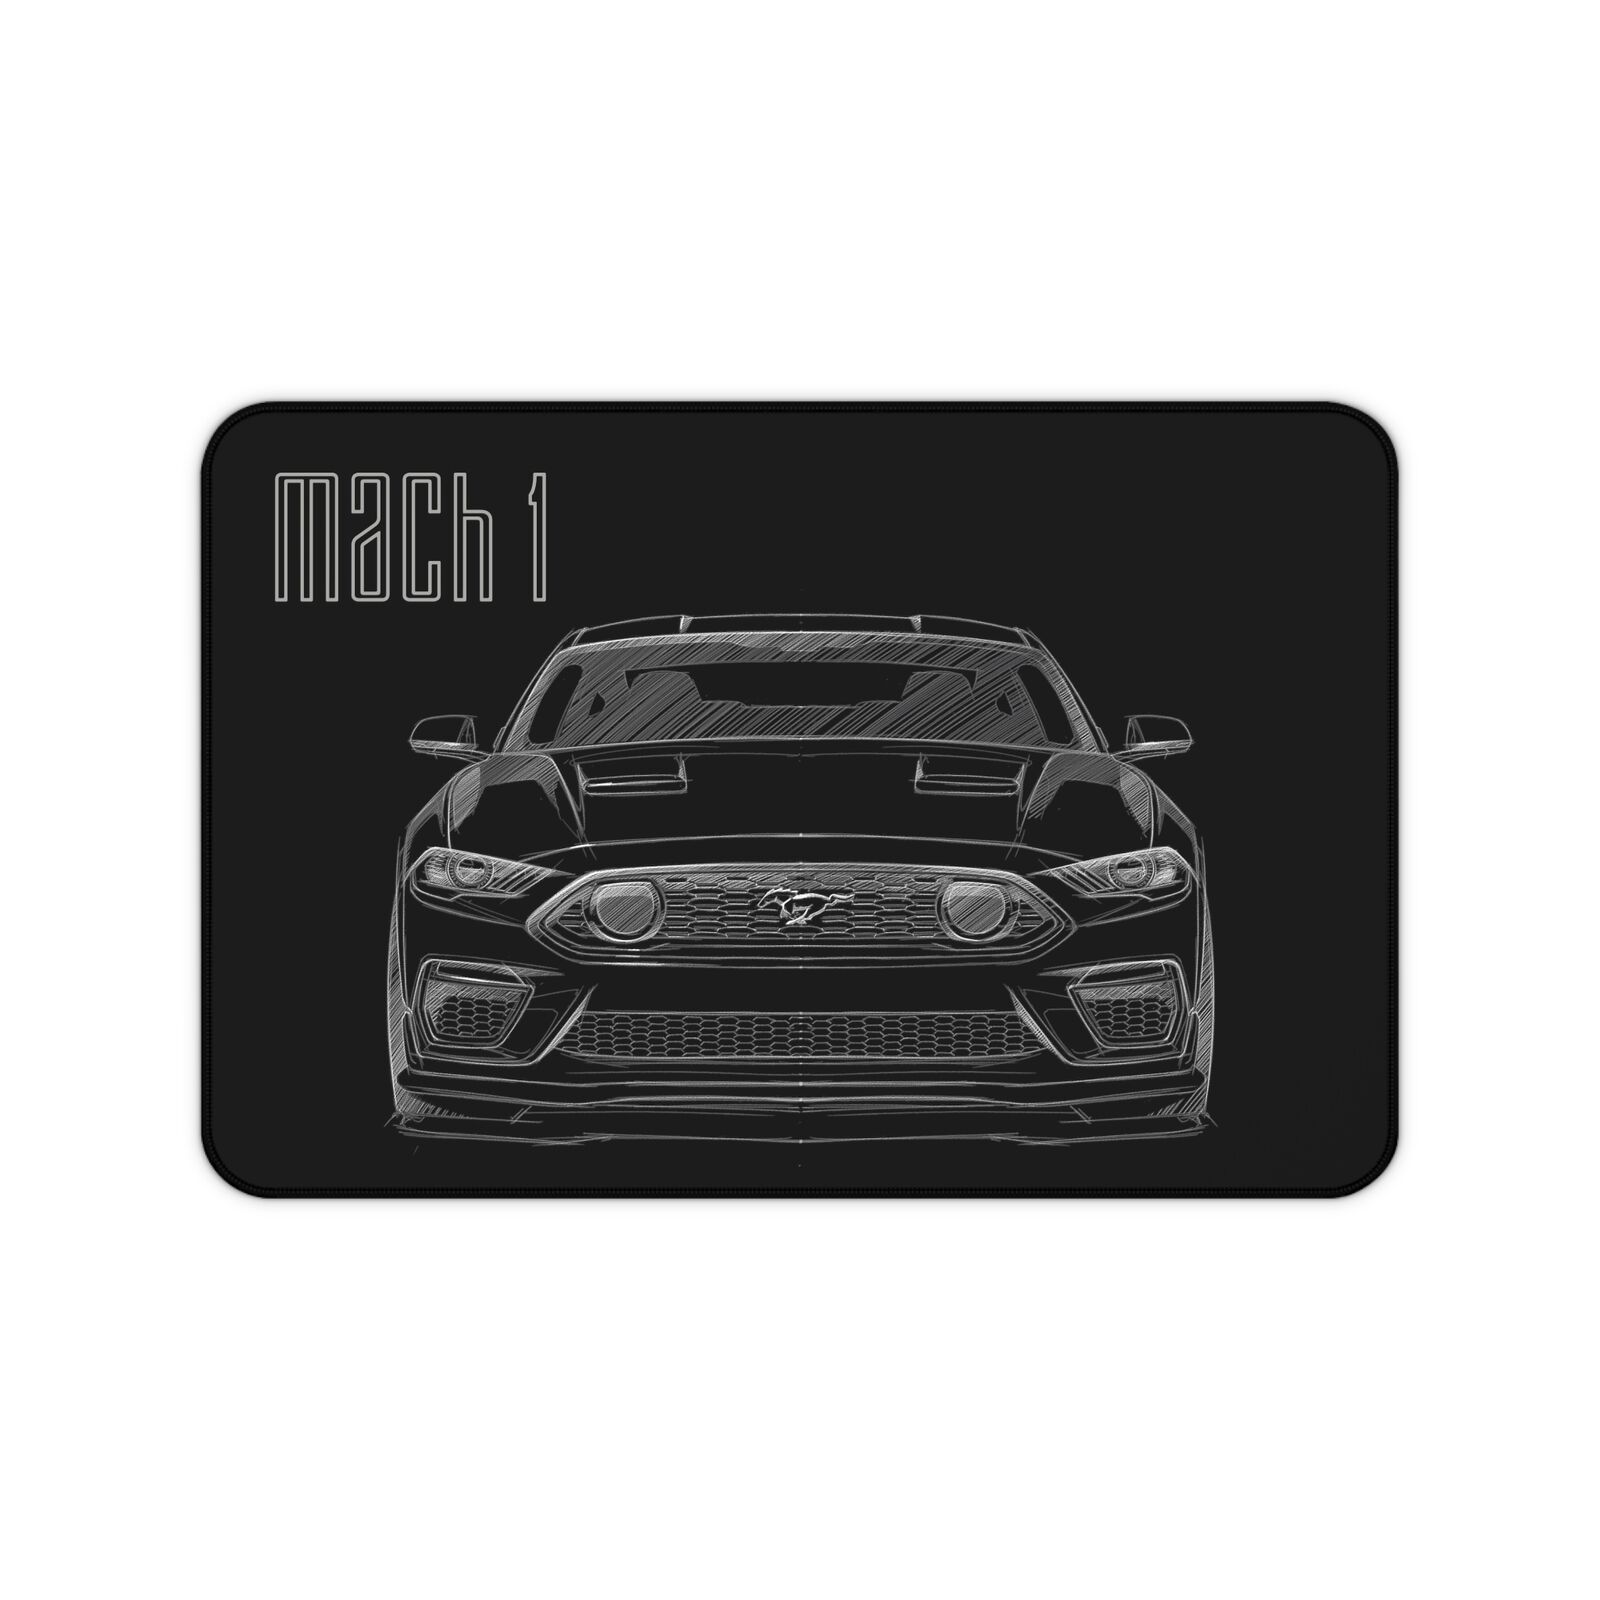 Ford Mustang Mach 1 Design Outline - Car Lover - Premium Desk Mat Mouse Pad